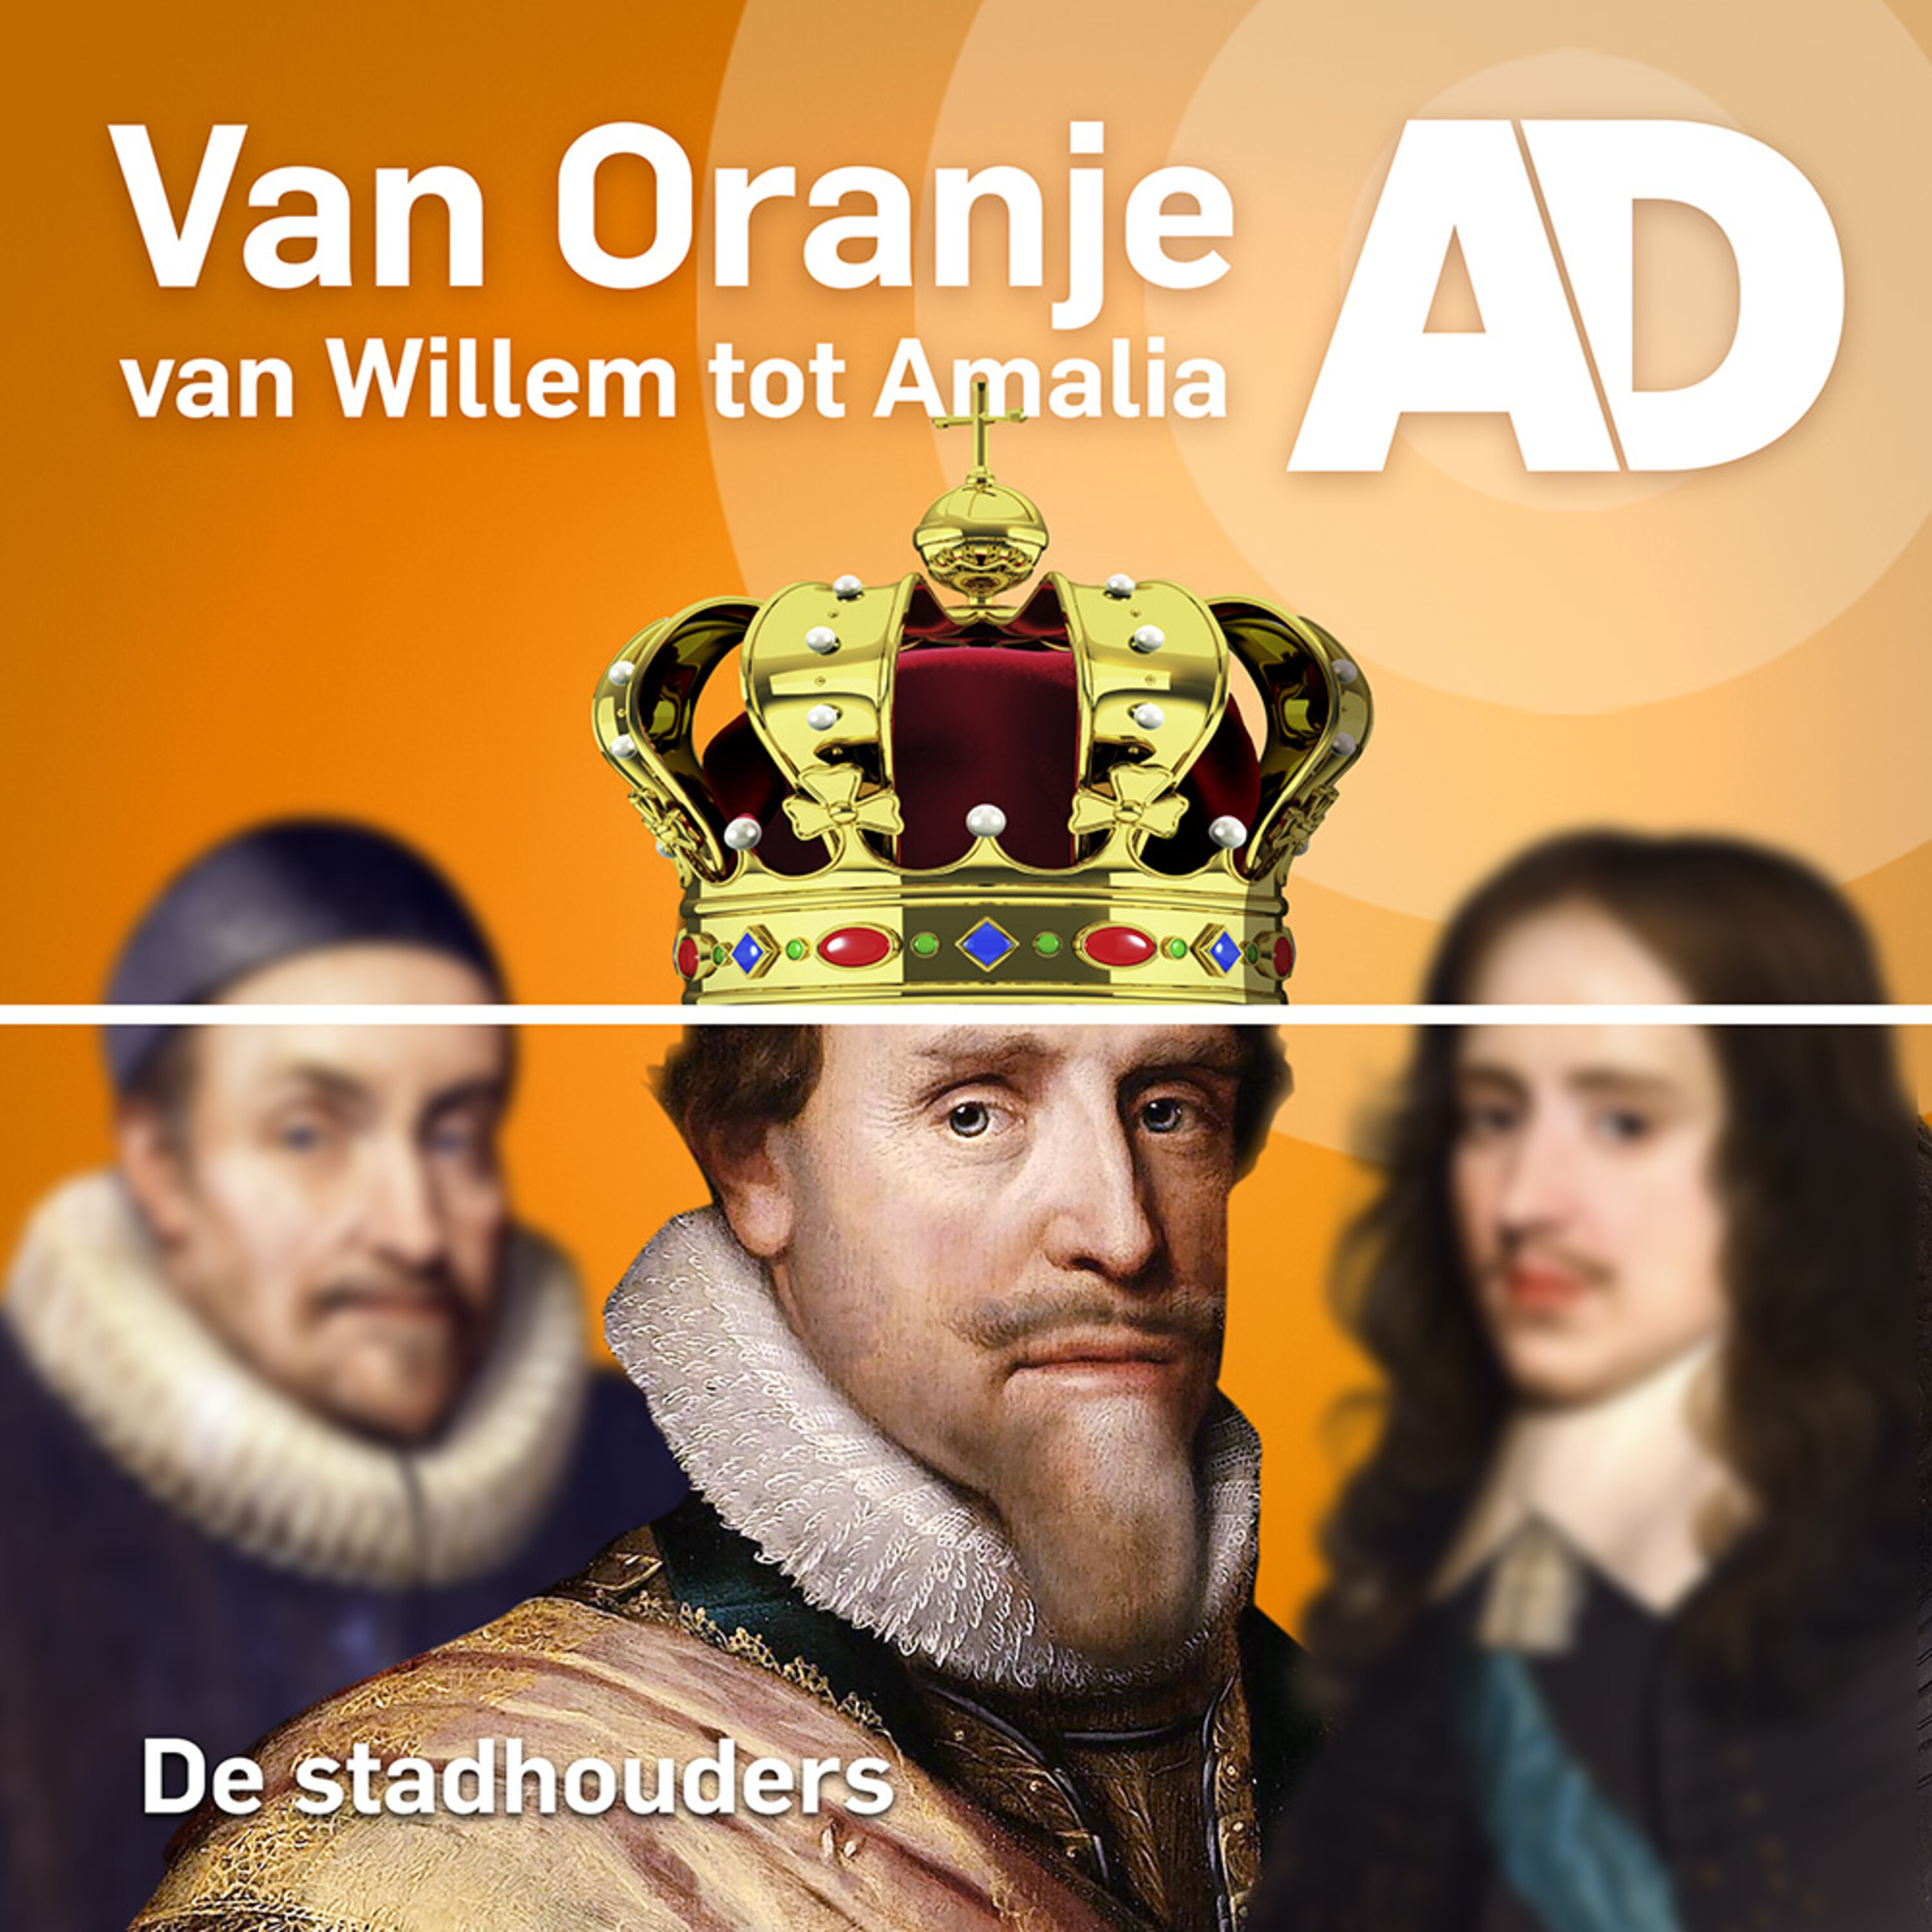 Van Oranje - van Willem tot Amalia logo